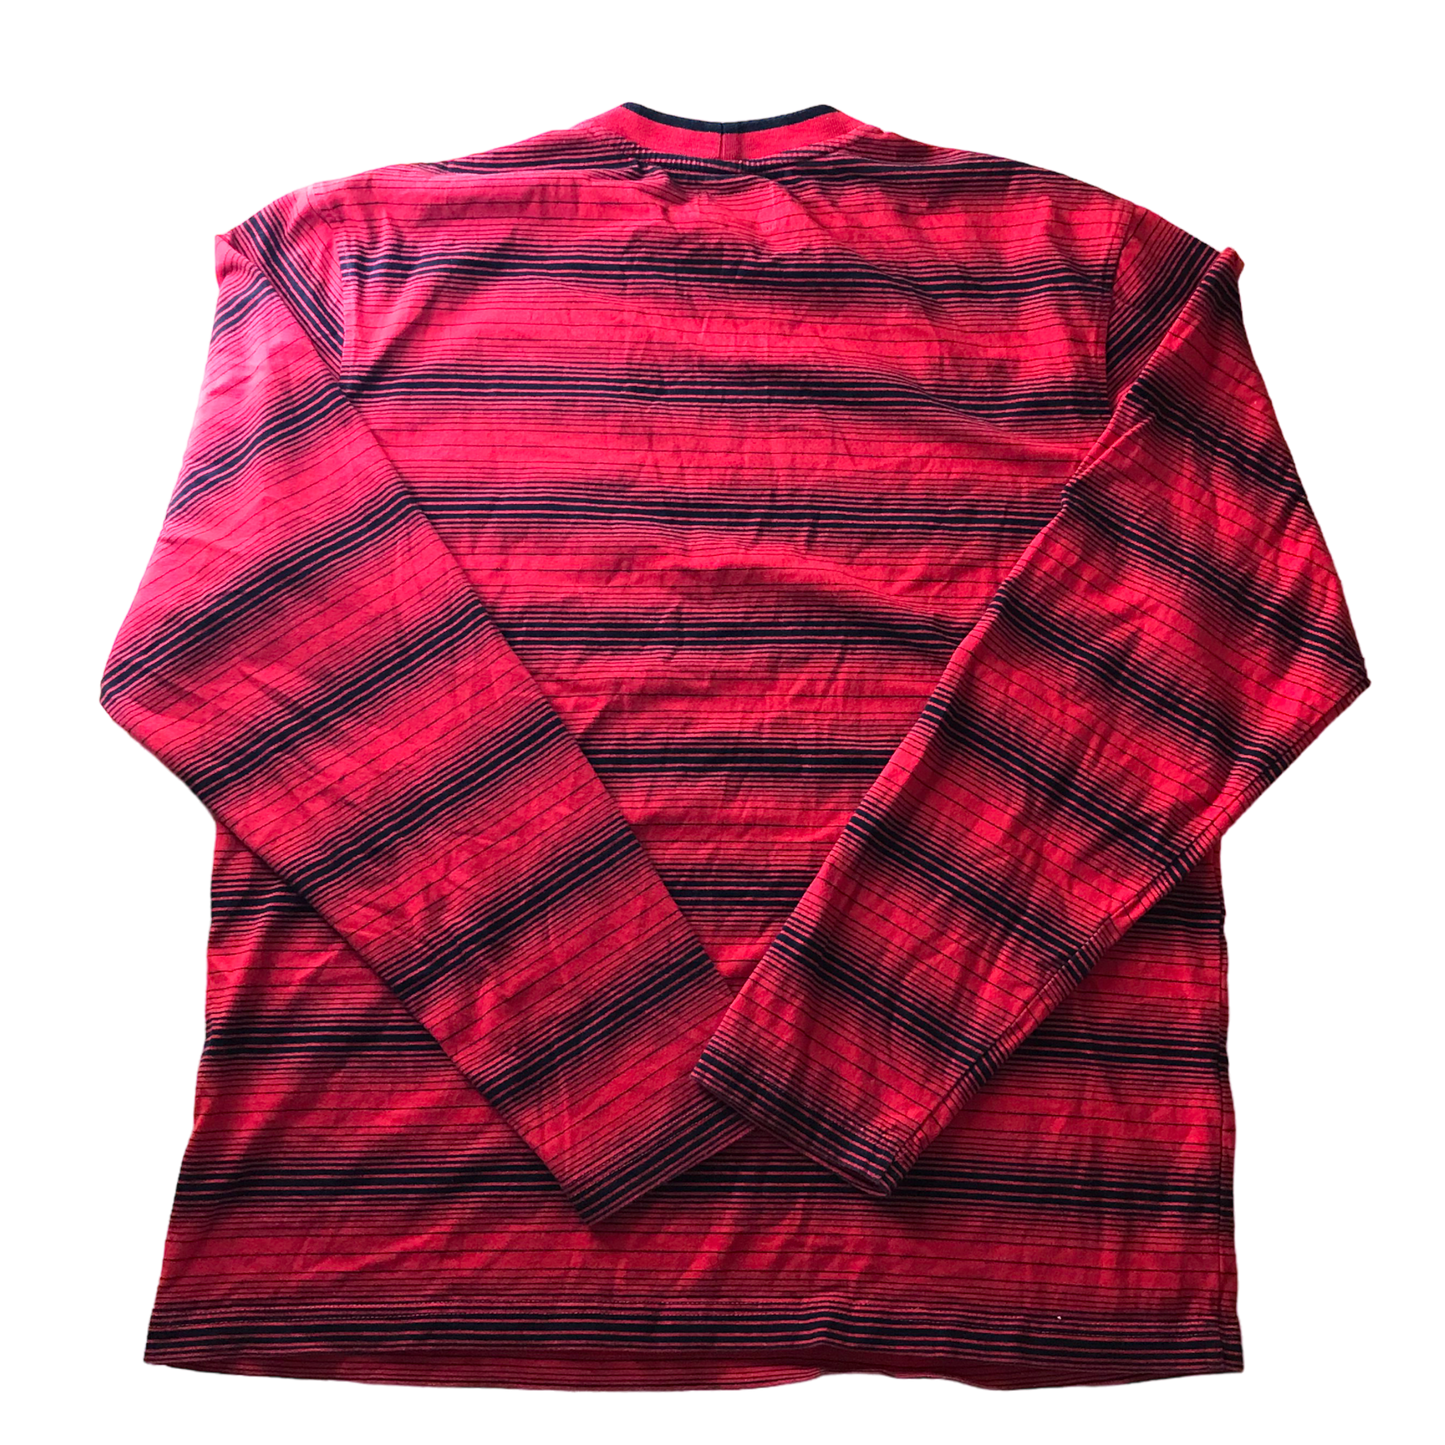 Stussy - Men's Red & Black Striped Longsleeve Shirt